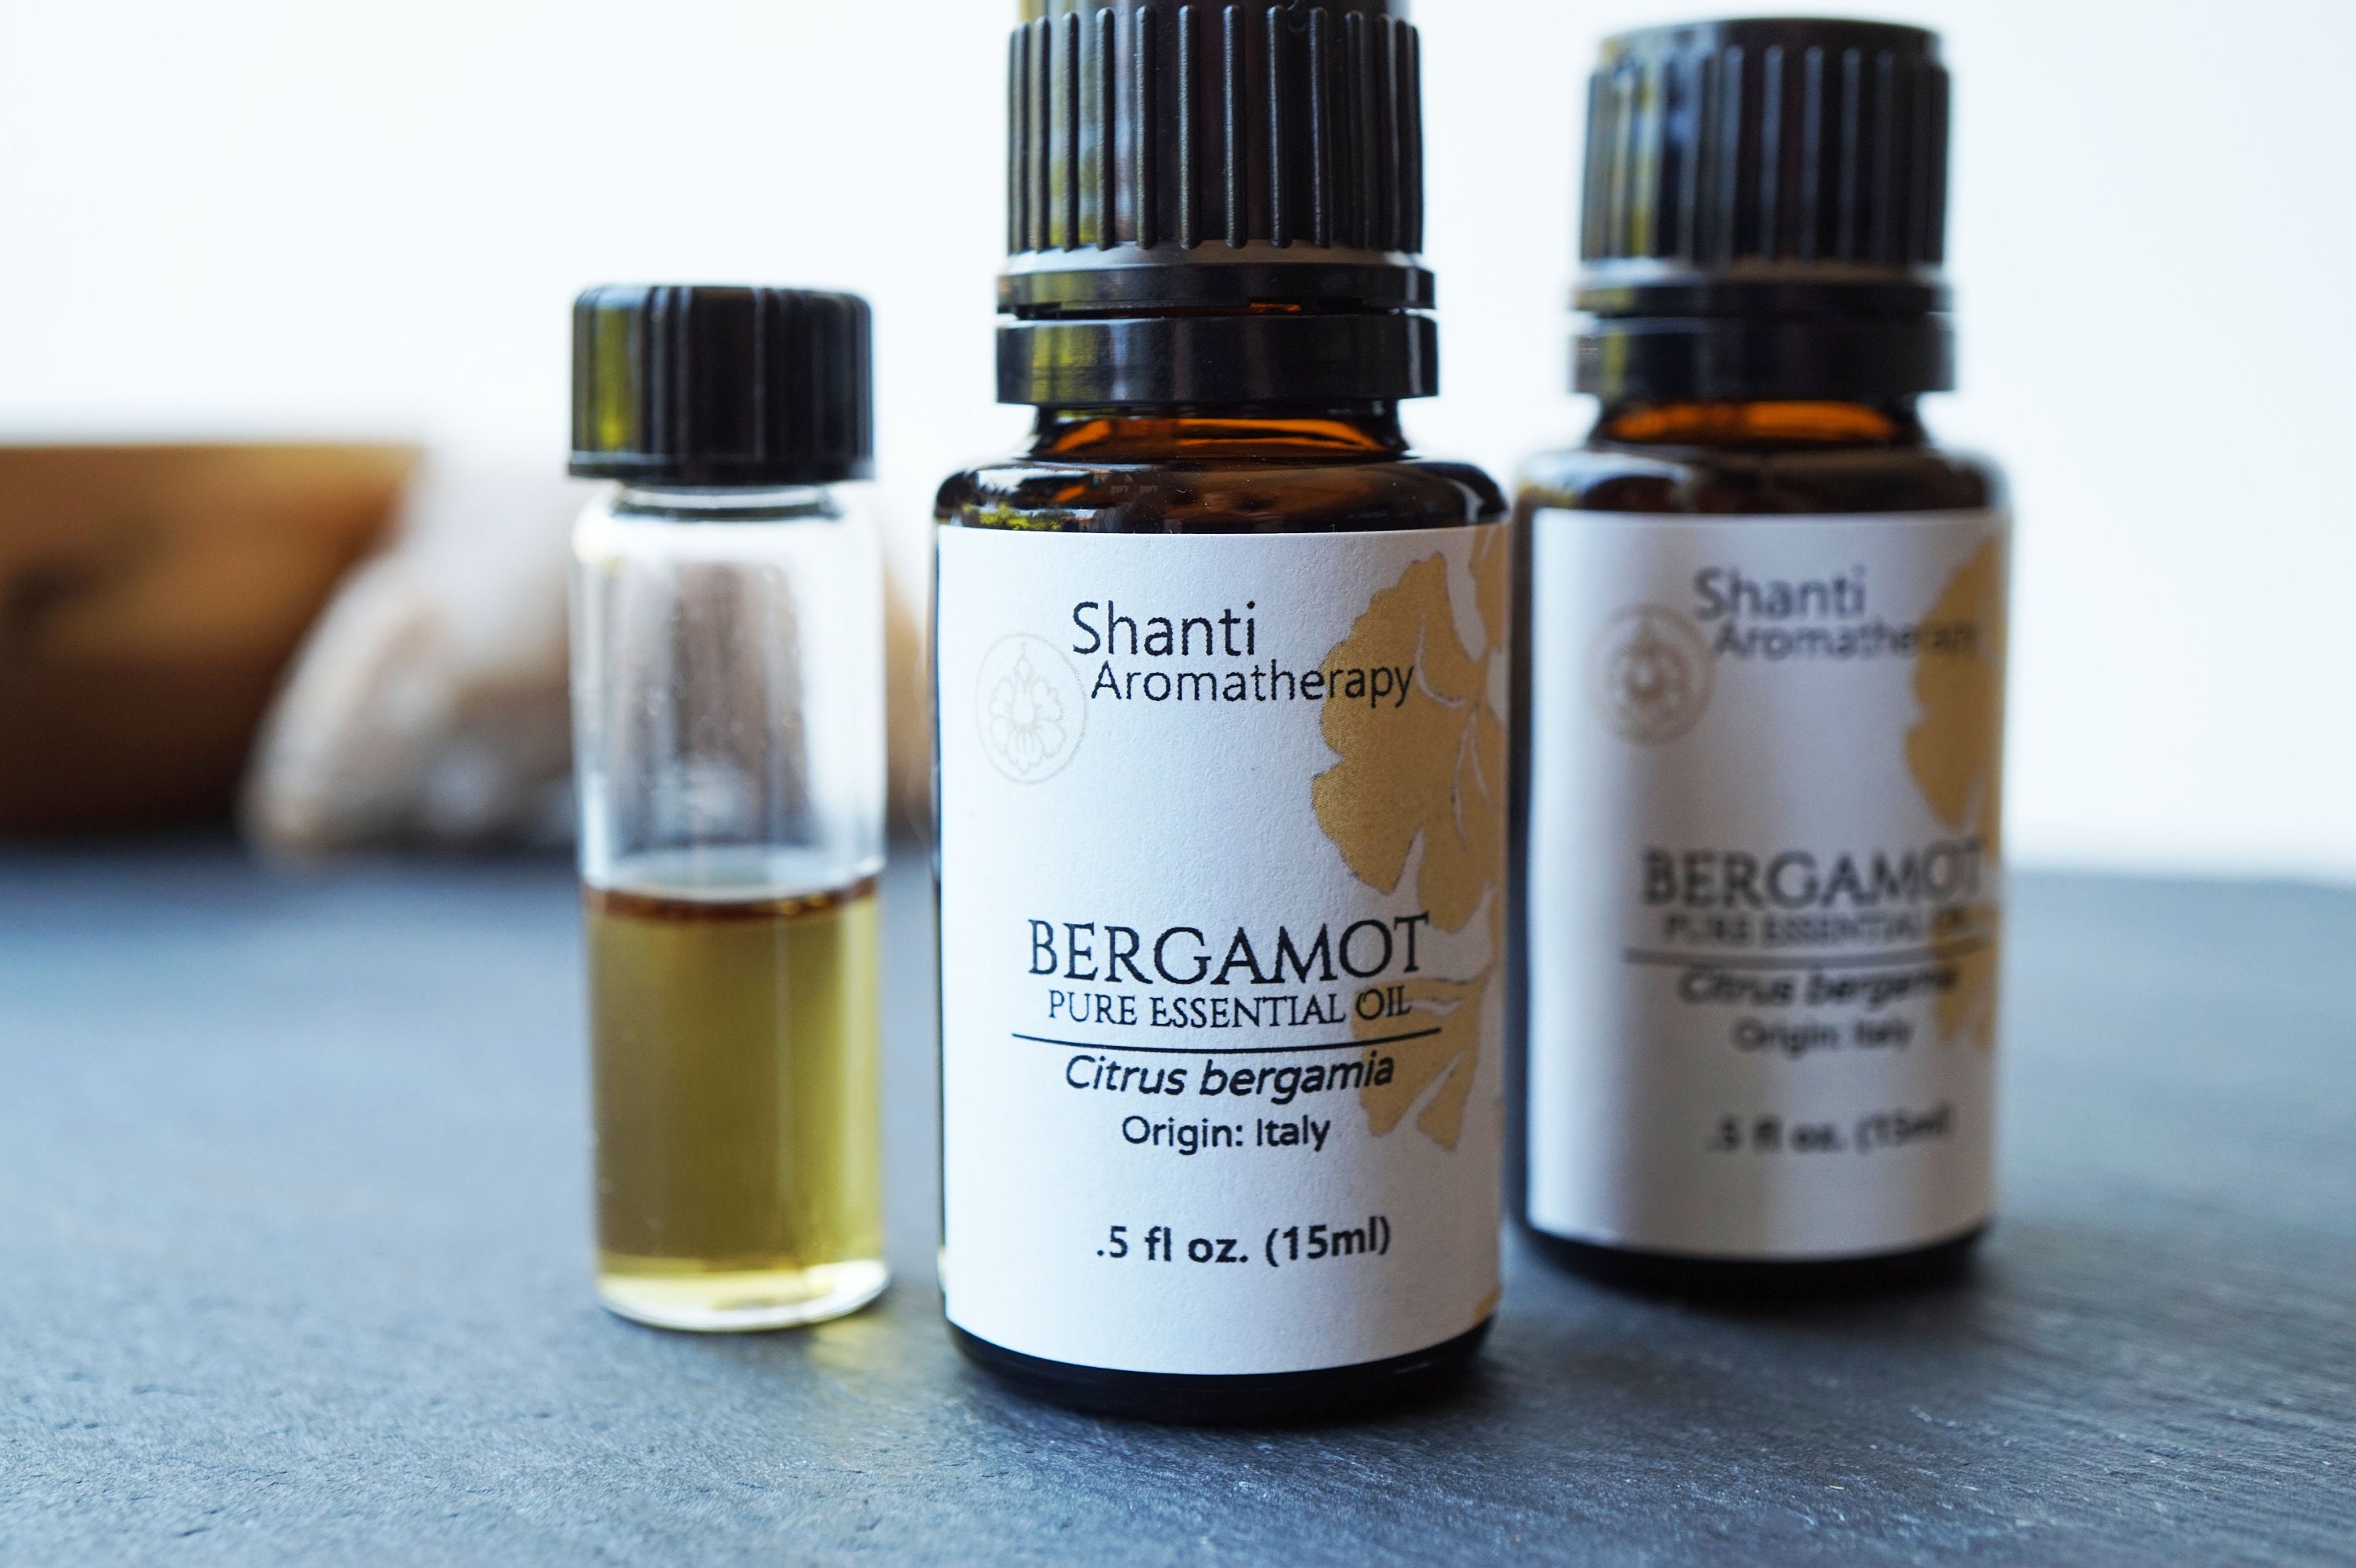 Now Essential Oils, 100% Pure, Bergamot - 1 fl oz